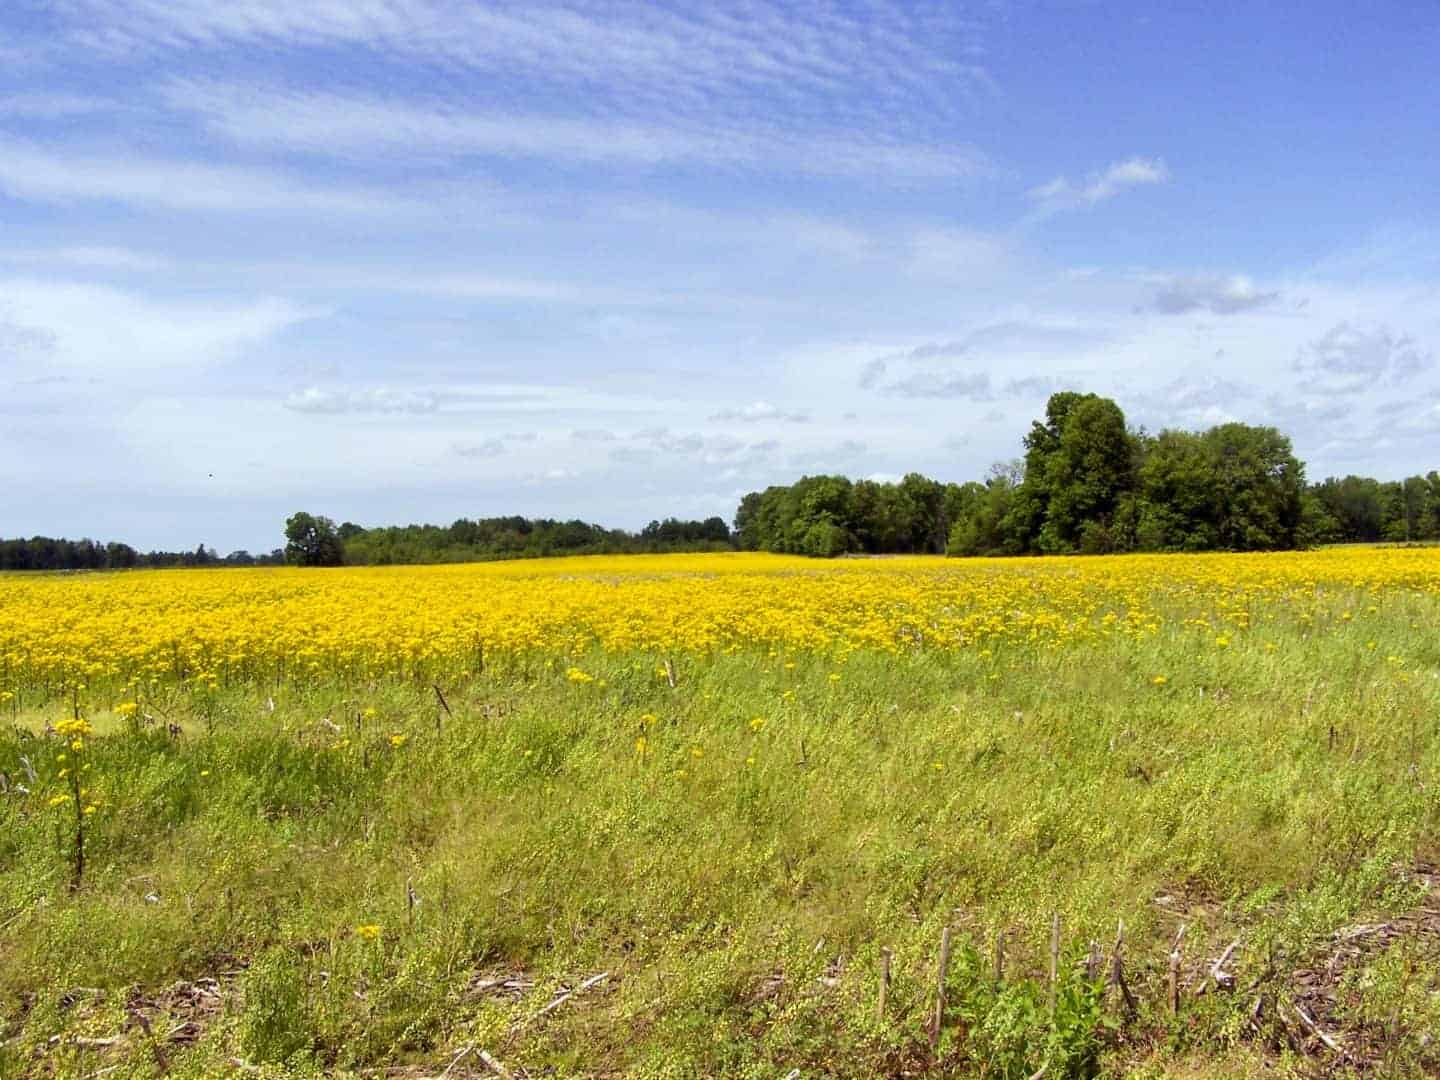 A wide, open field of golden mustard